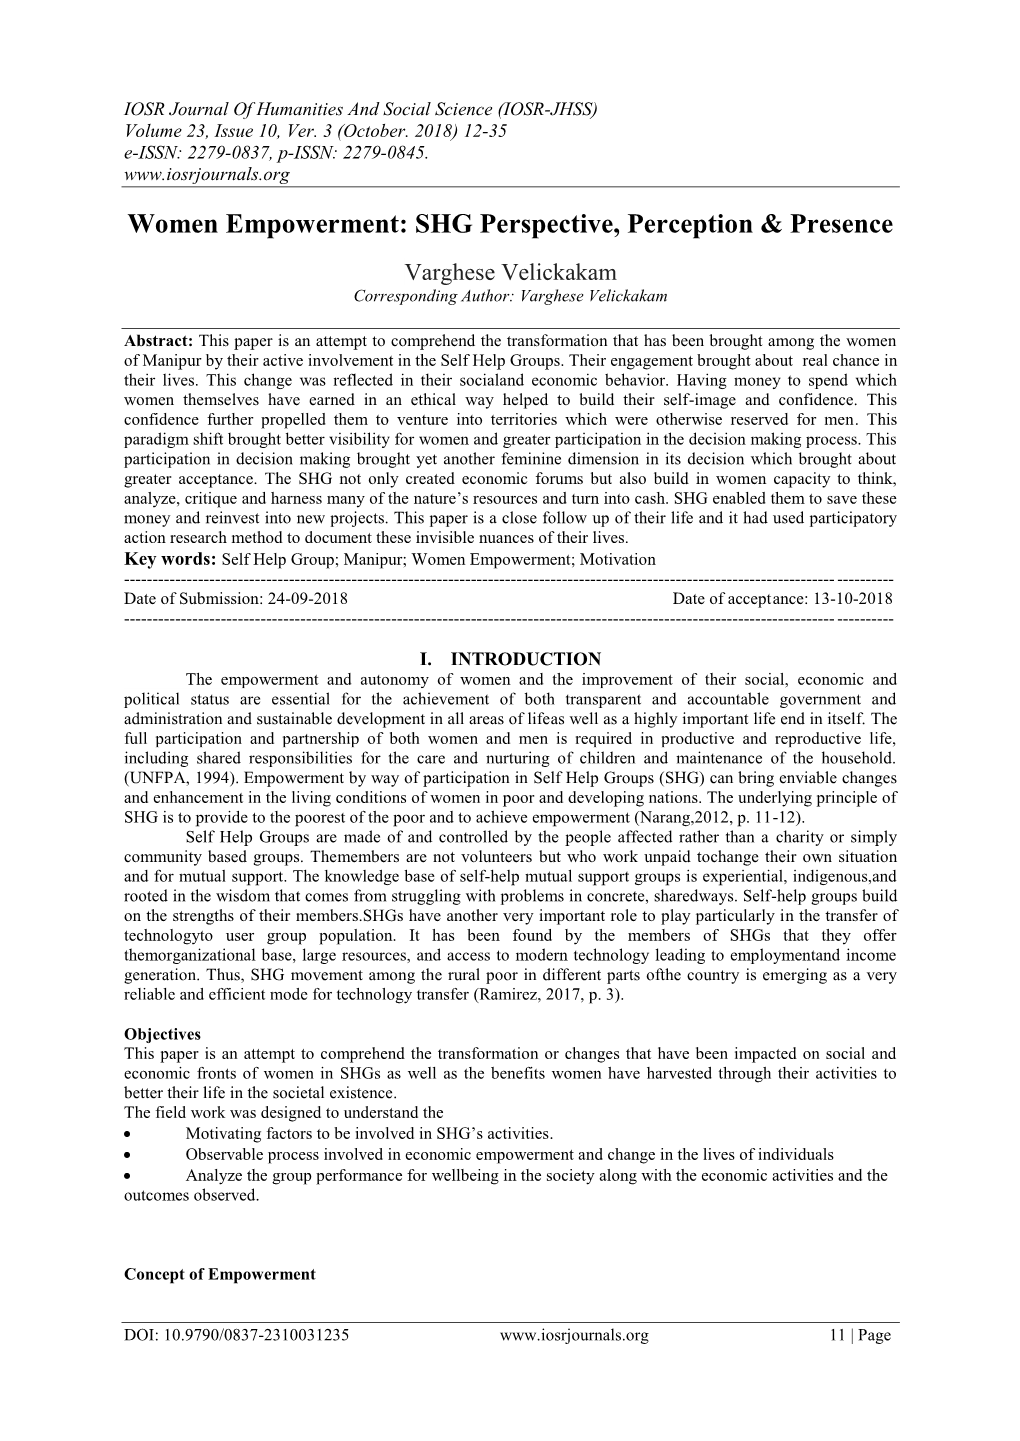 Women Empowerment: SHG Perspective, Perception & Presence